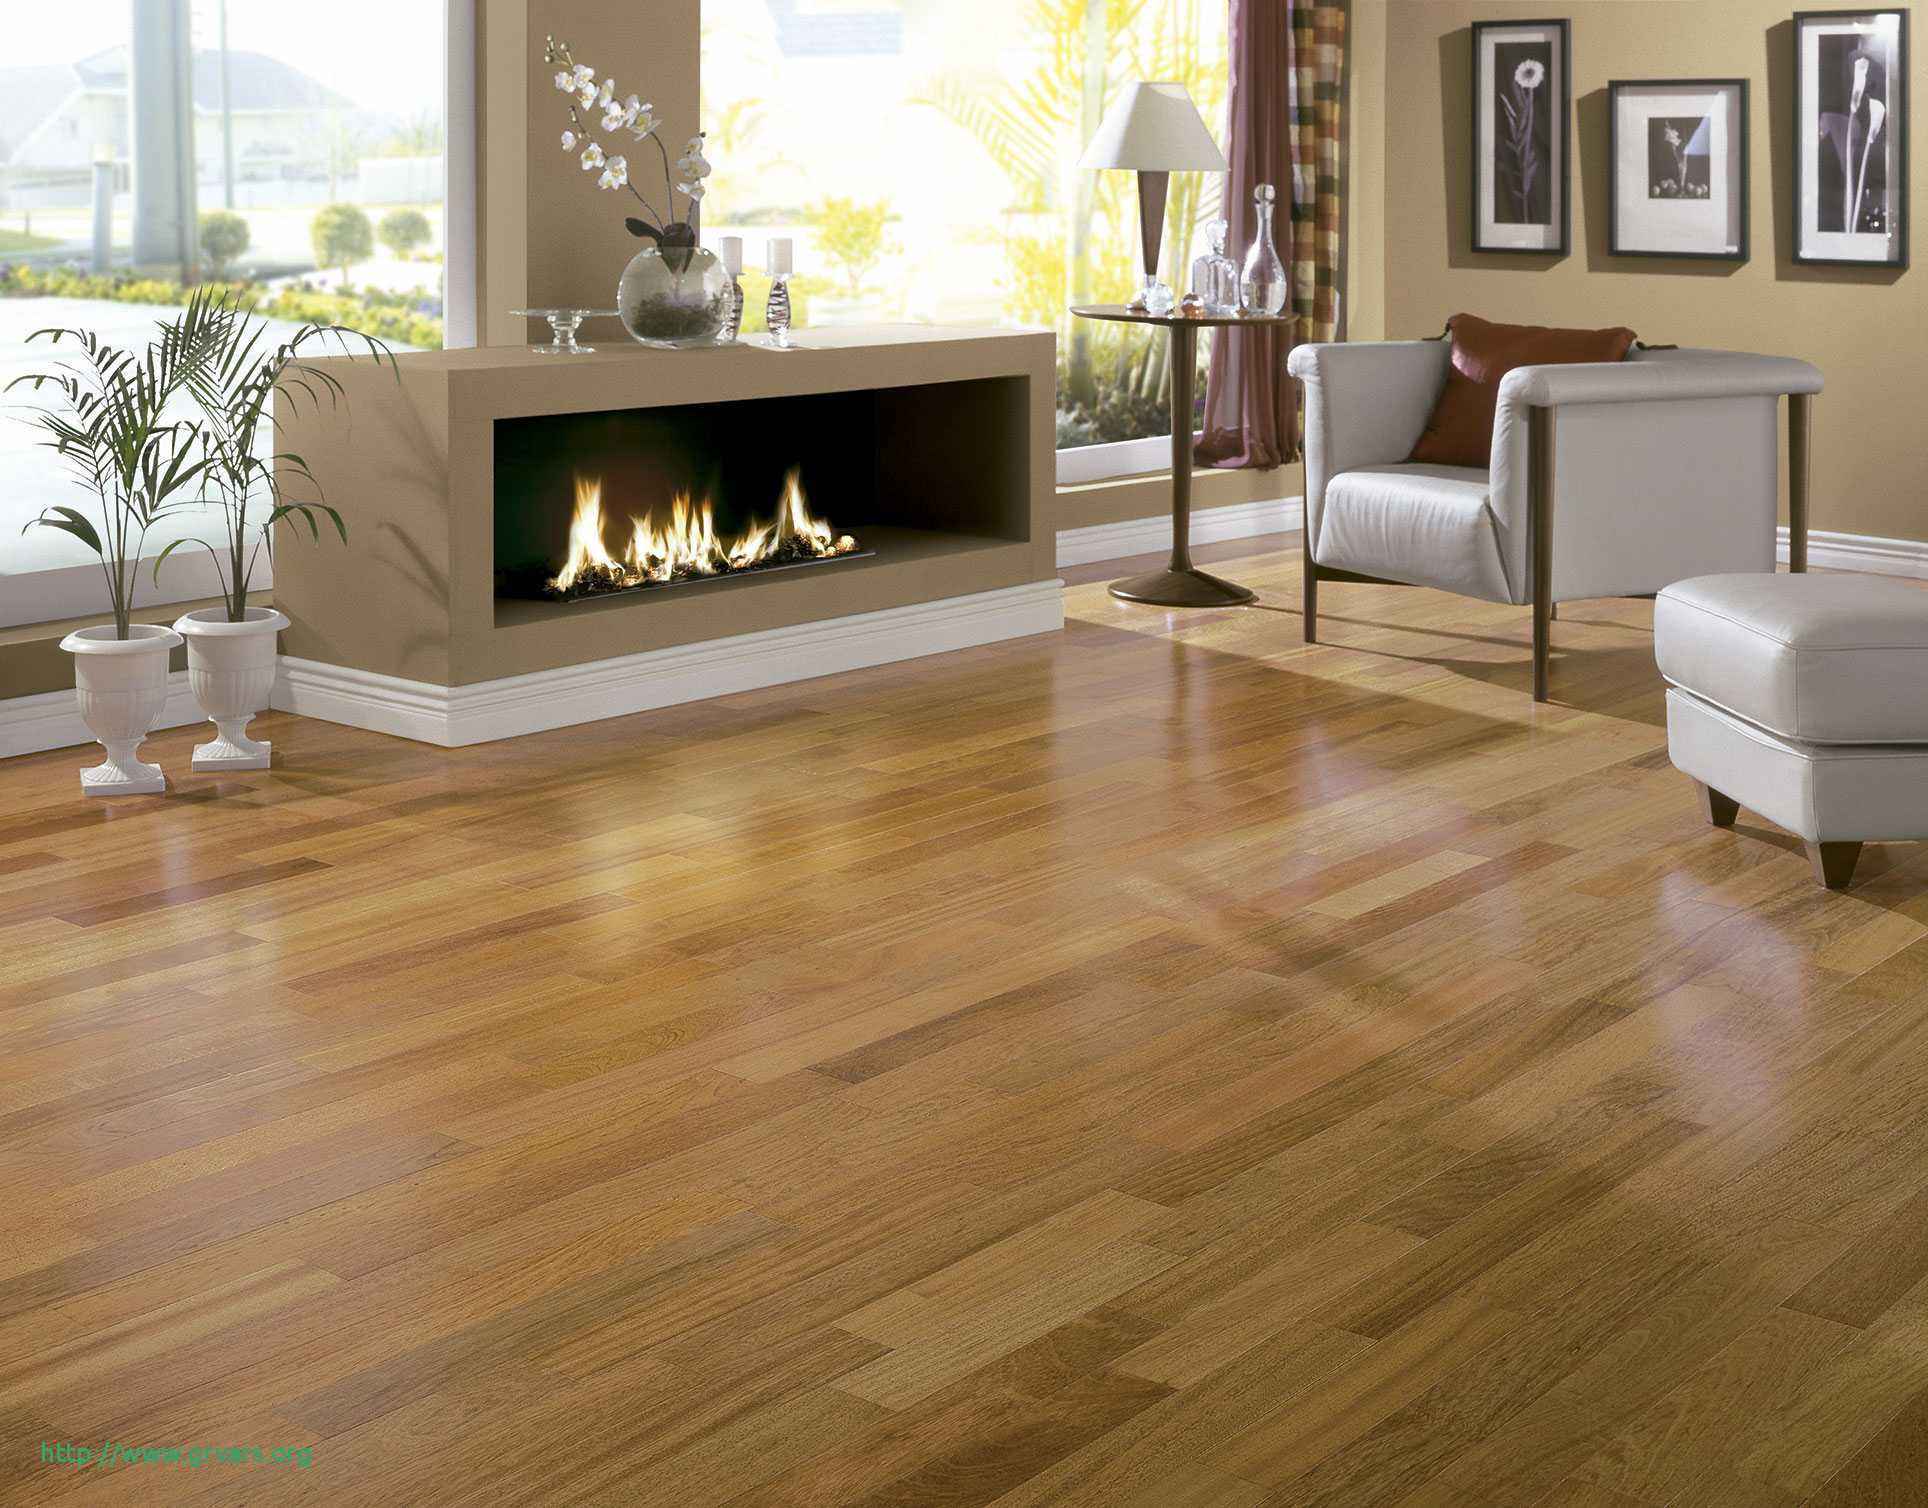 Oak Fireplace Inspirational 26 Re Mended Hardwood Floor Fireplace Transition